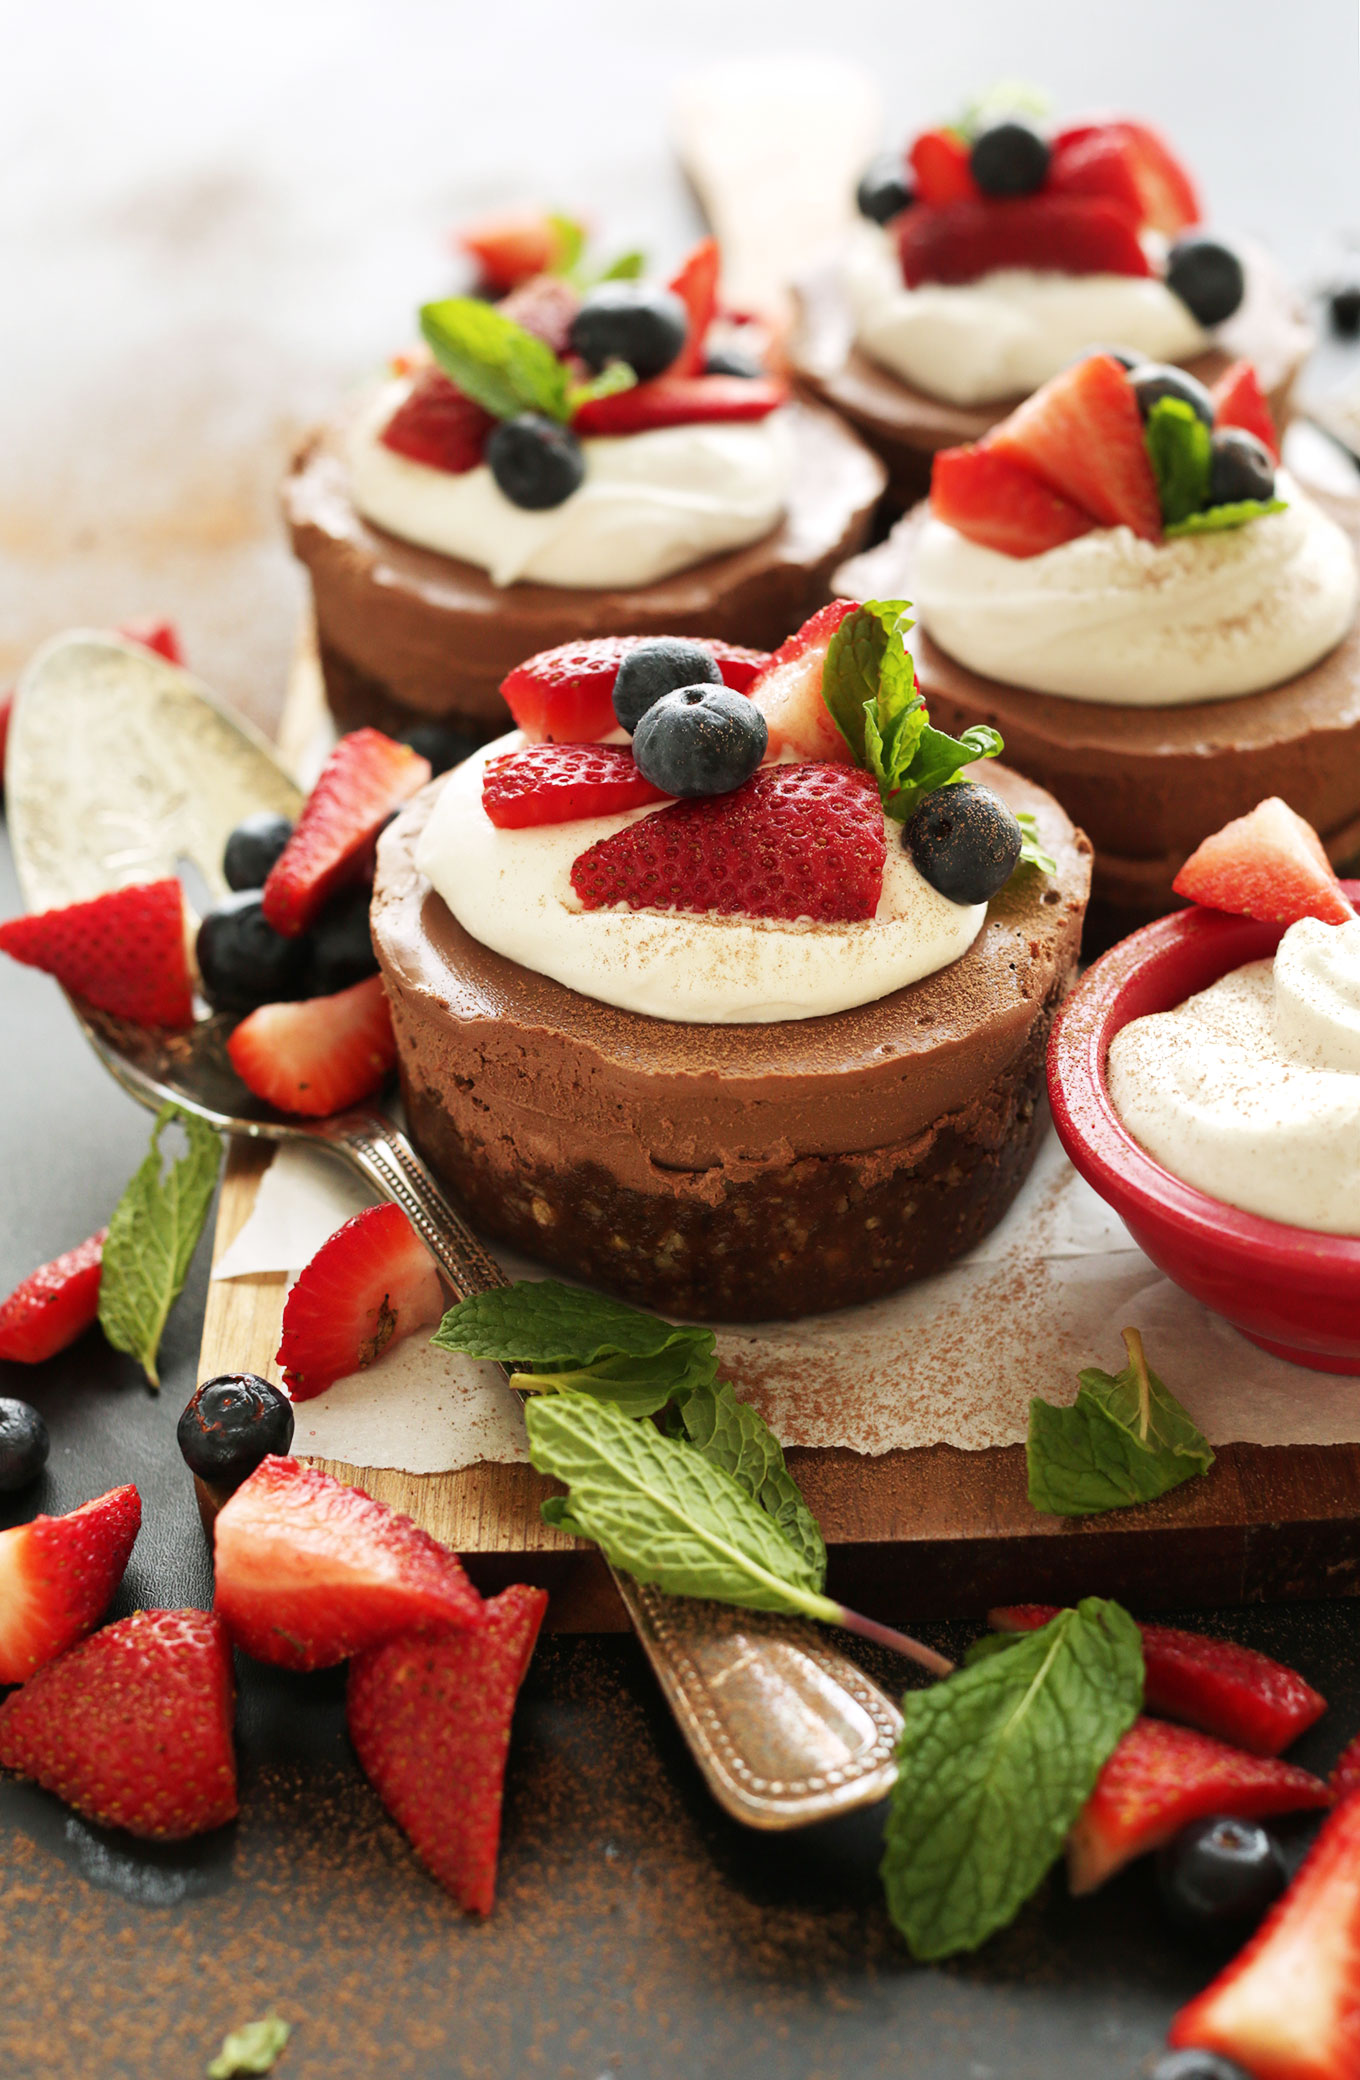 Creamy-perfect-no-bake-vegan-chocolate-cheesecakes-in-just-10-ingredients-vegan-glutenfree-chocolate